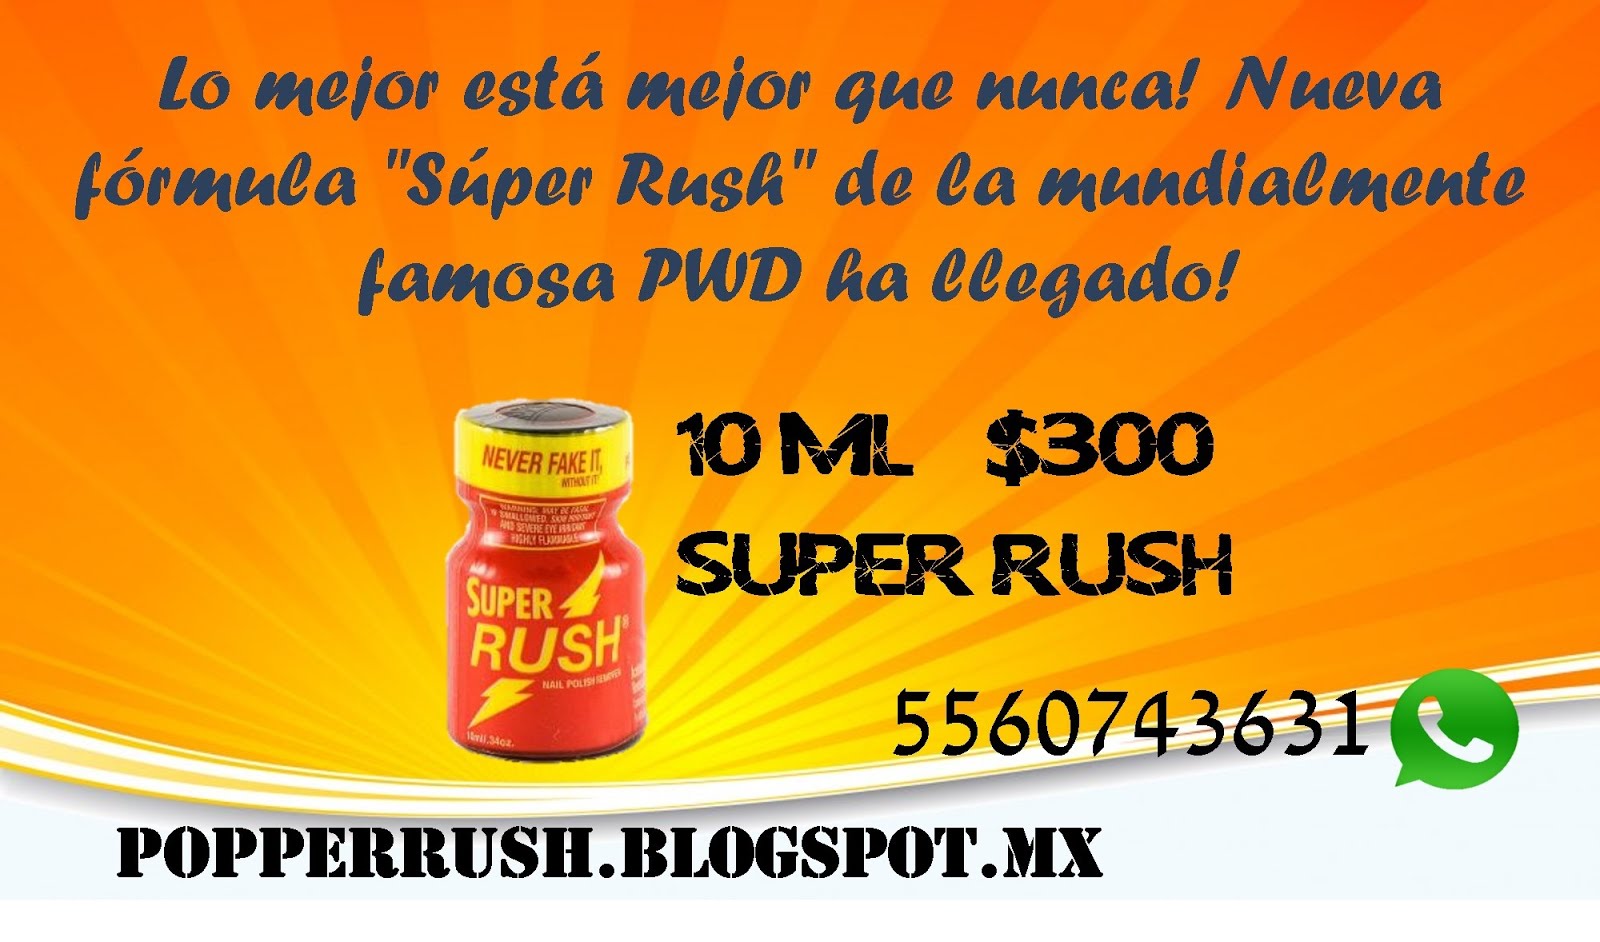 SUPER RUSH